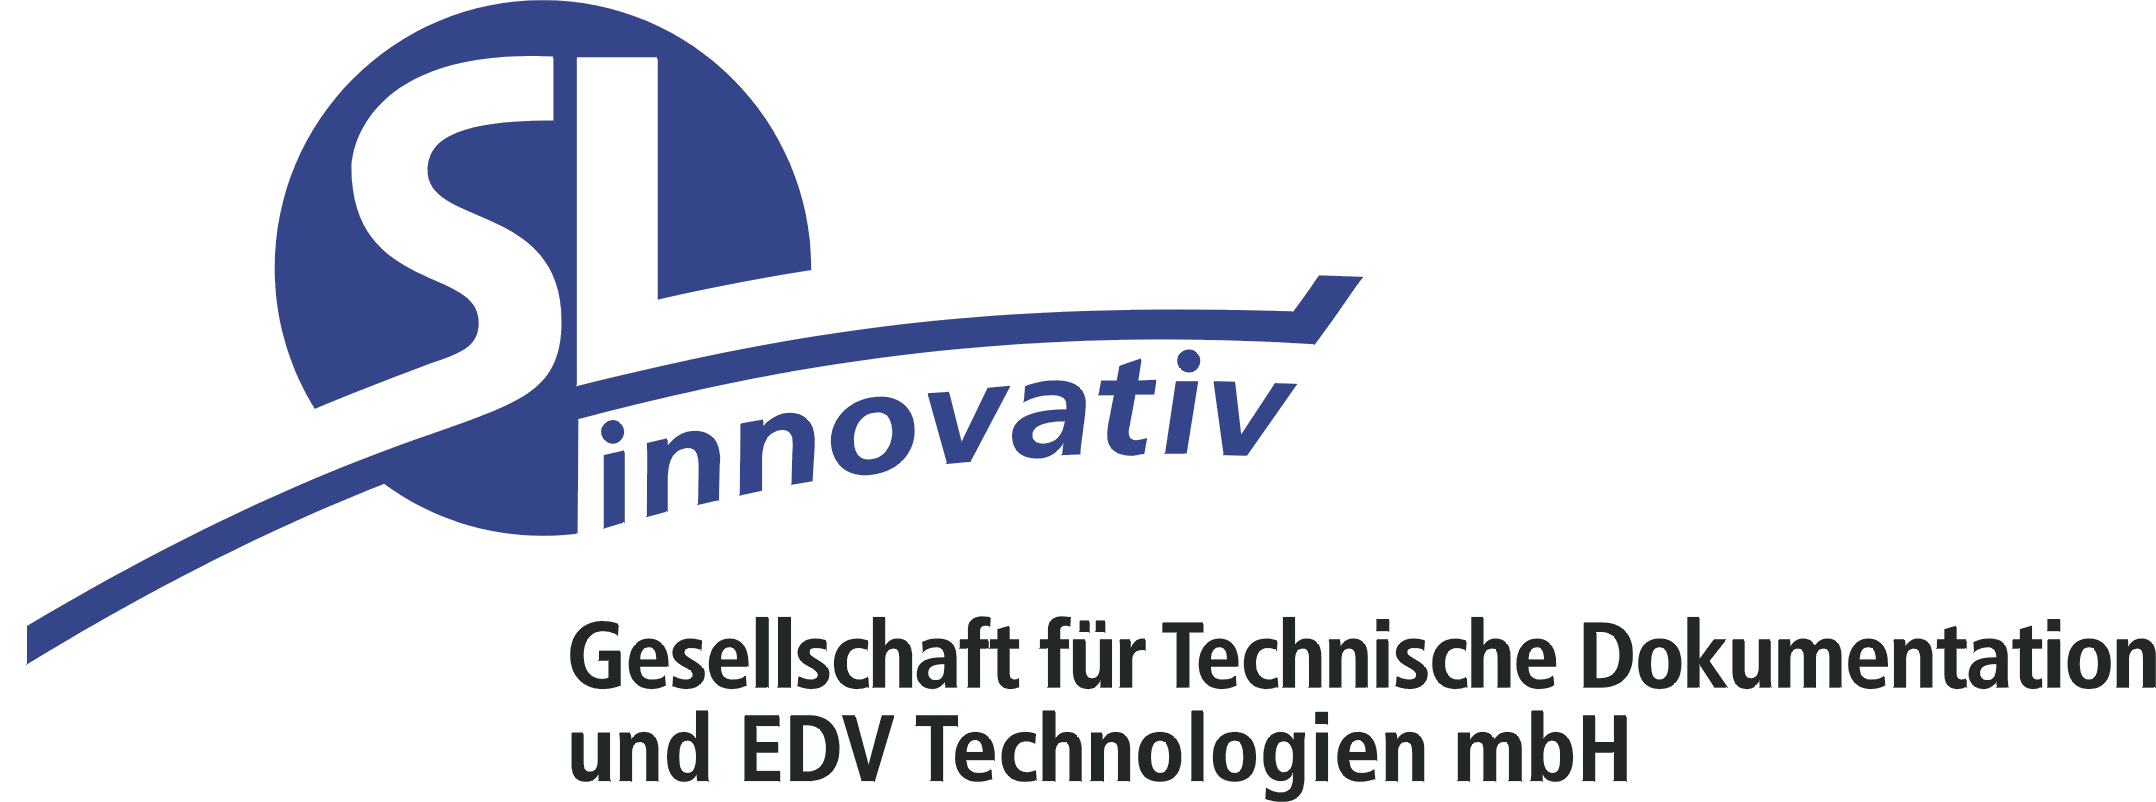 SL_innovativ_Logo_farbe_text_de